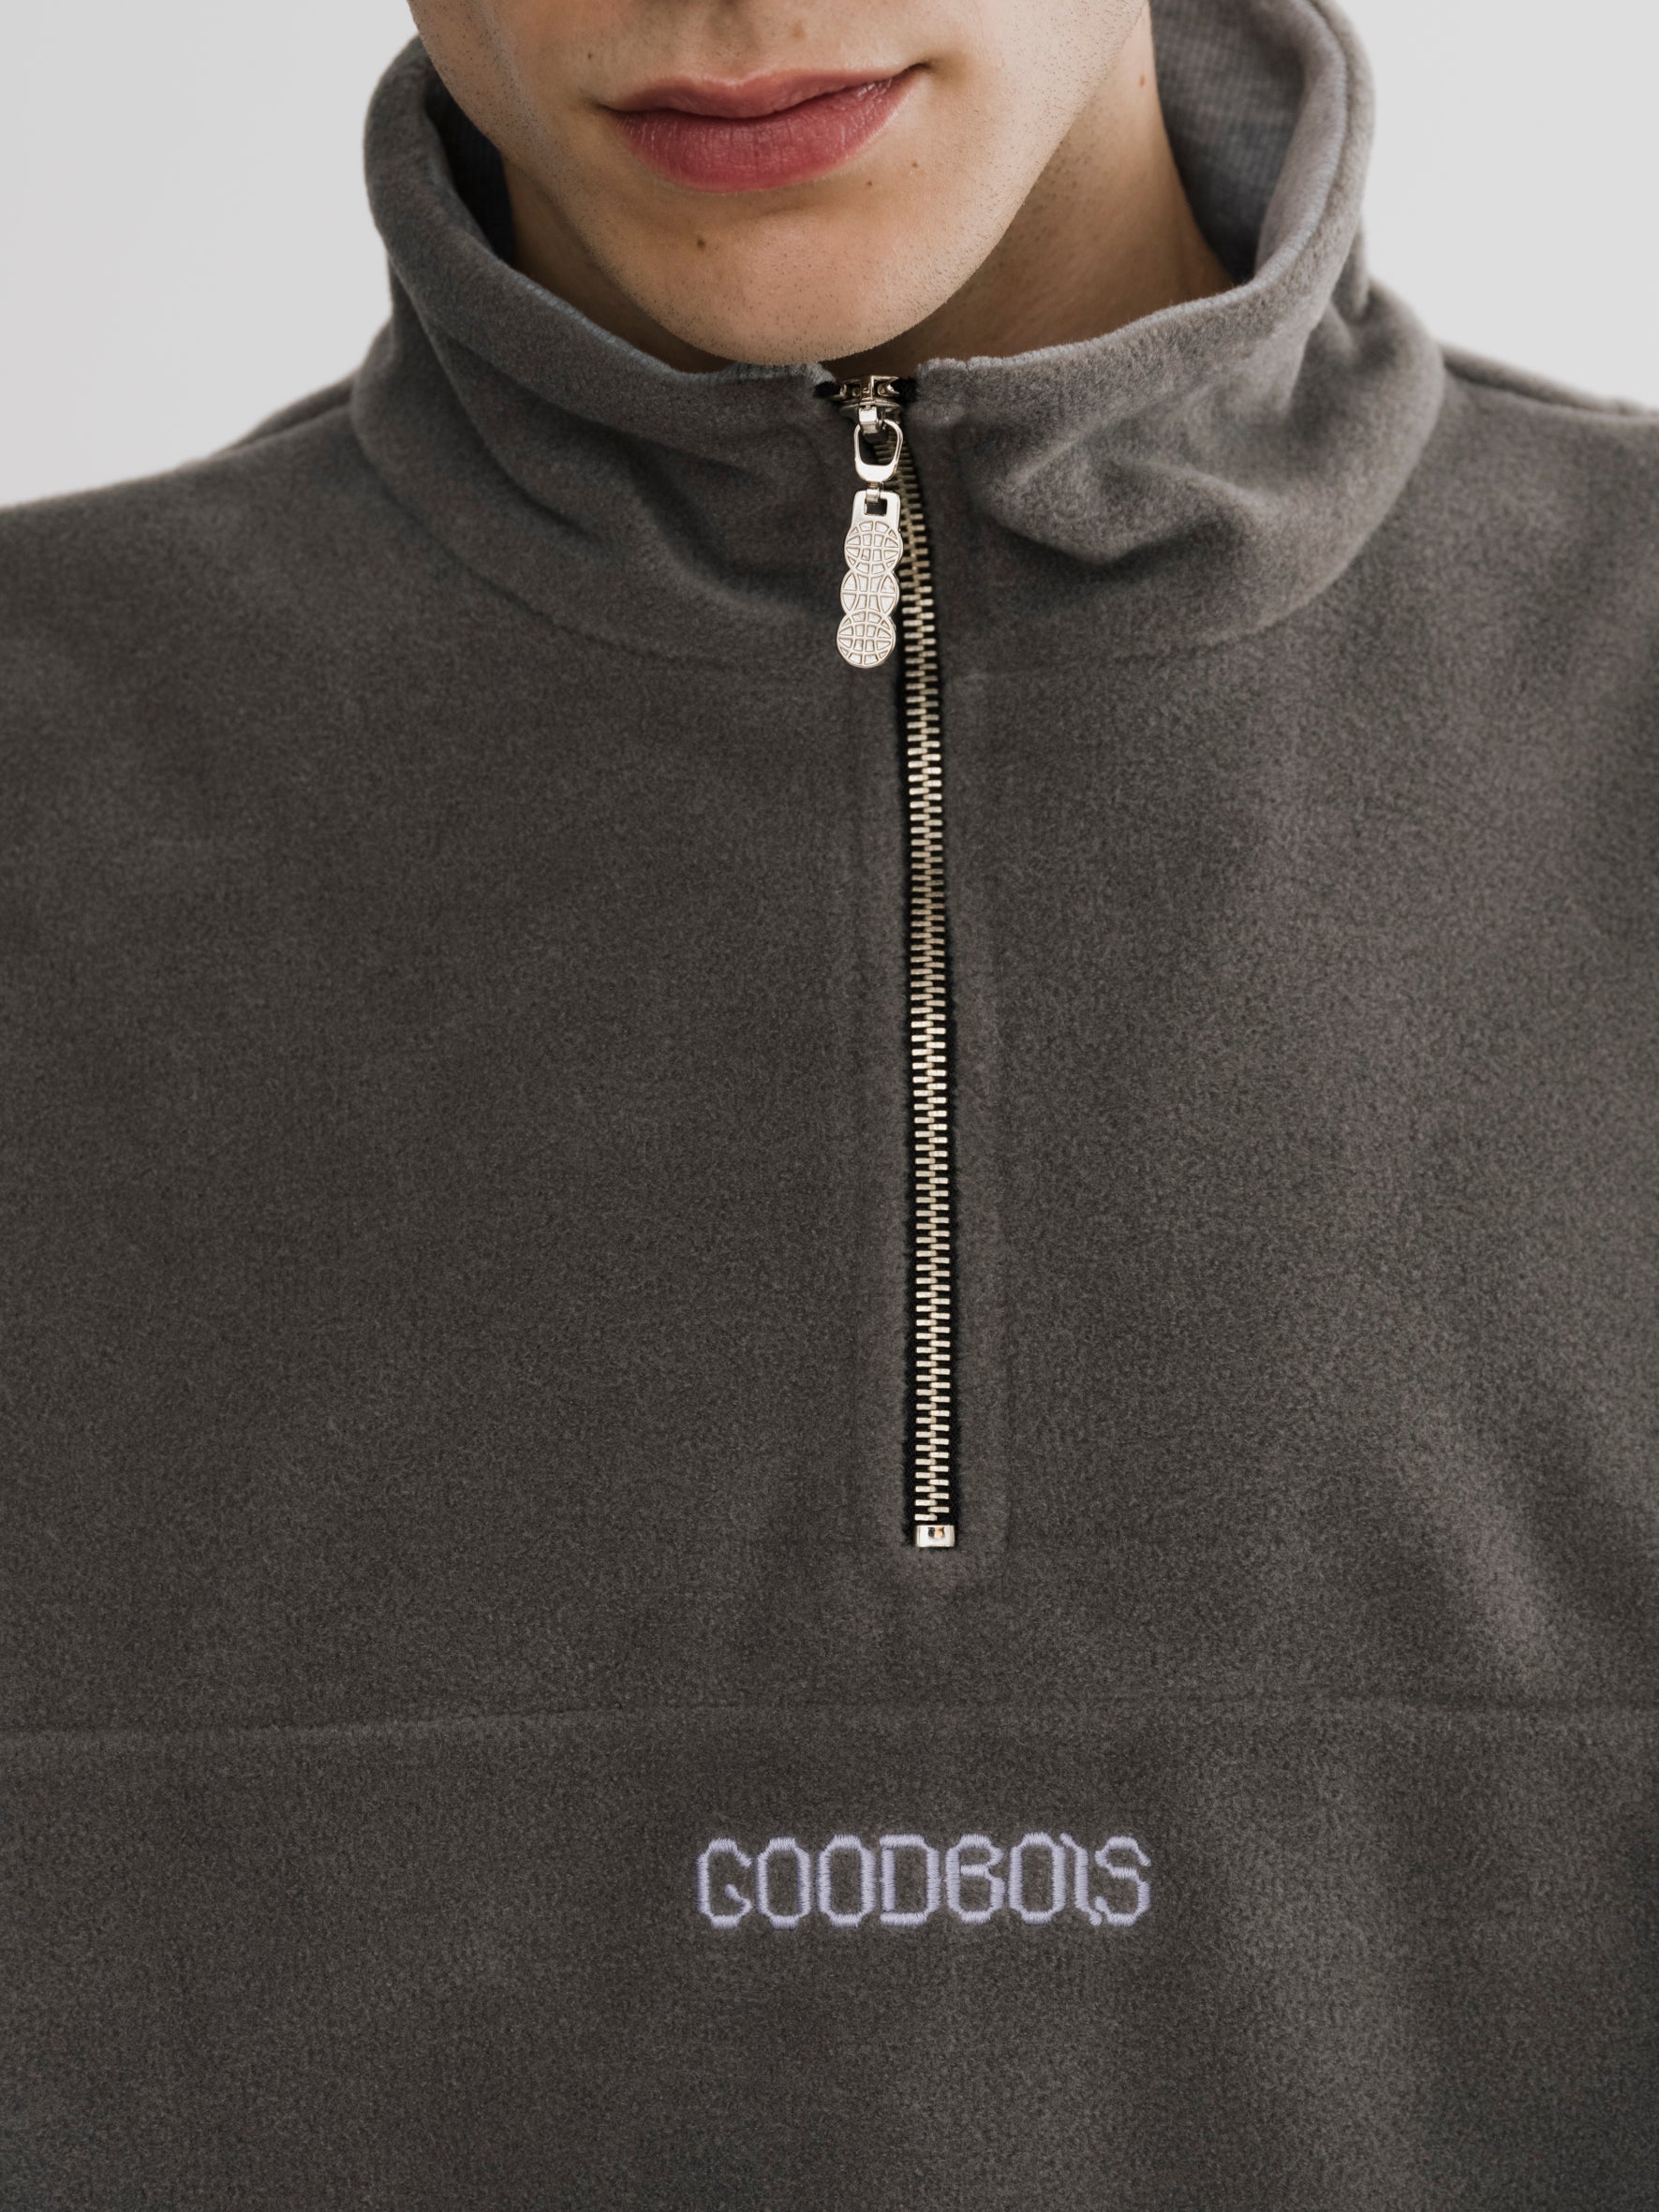 Goodbois Solar Fleece Halfzip Grey